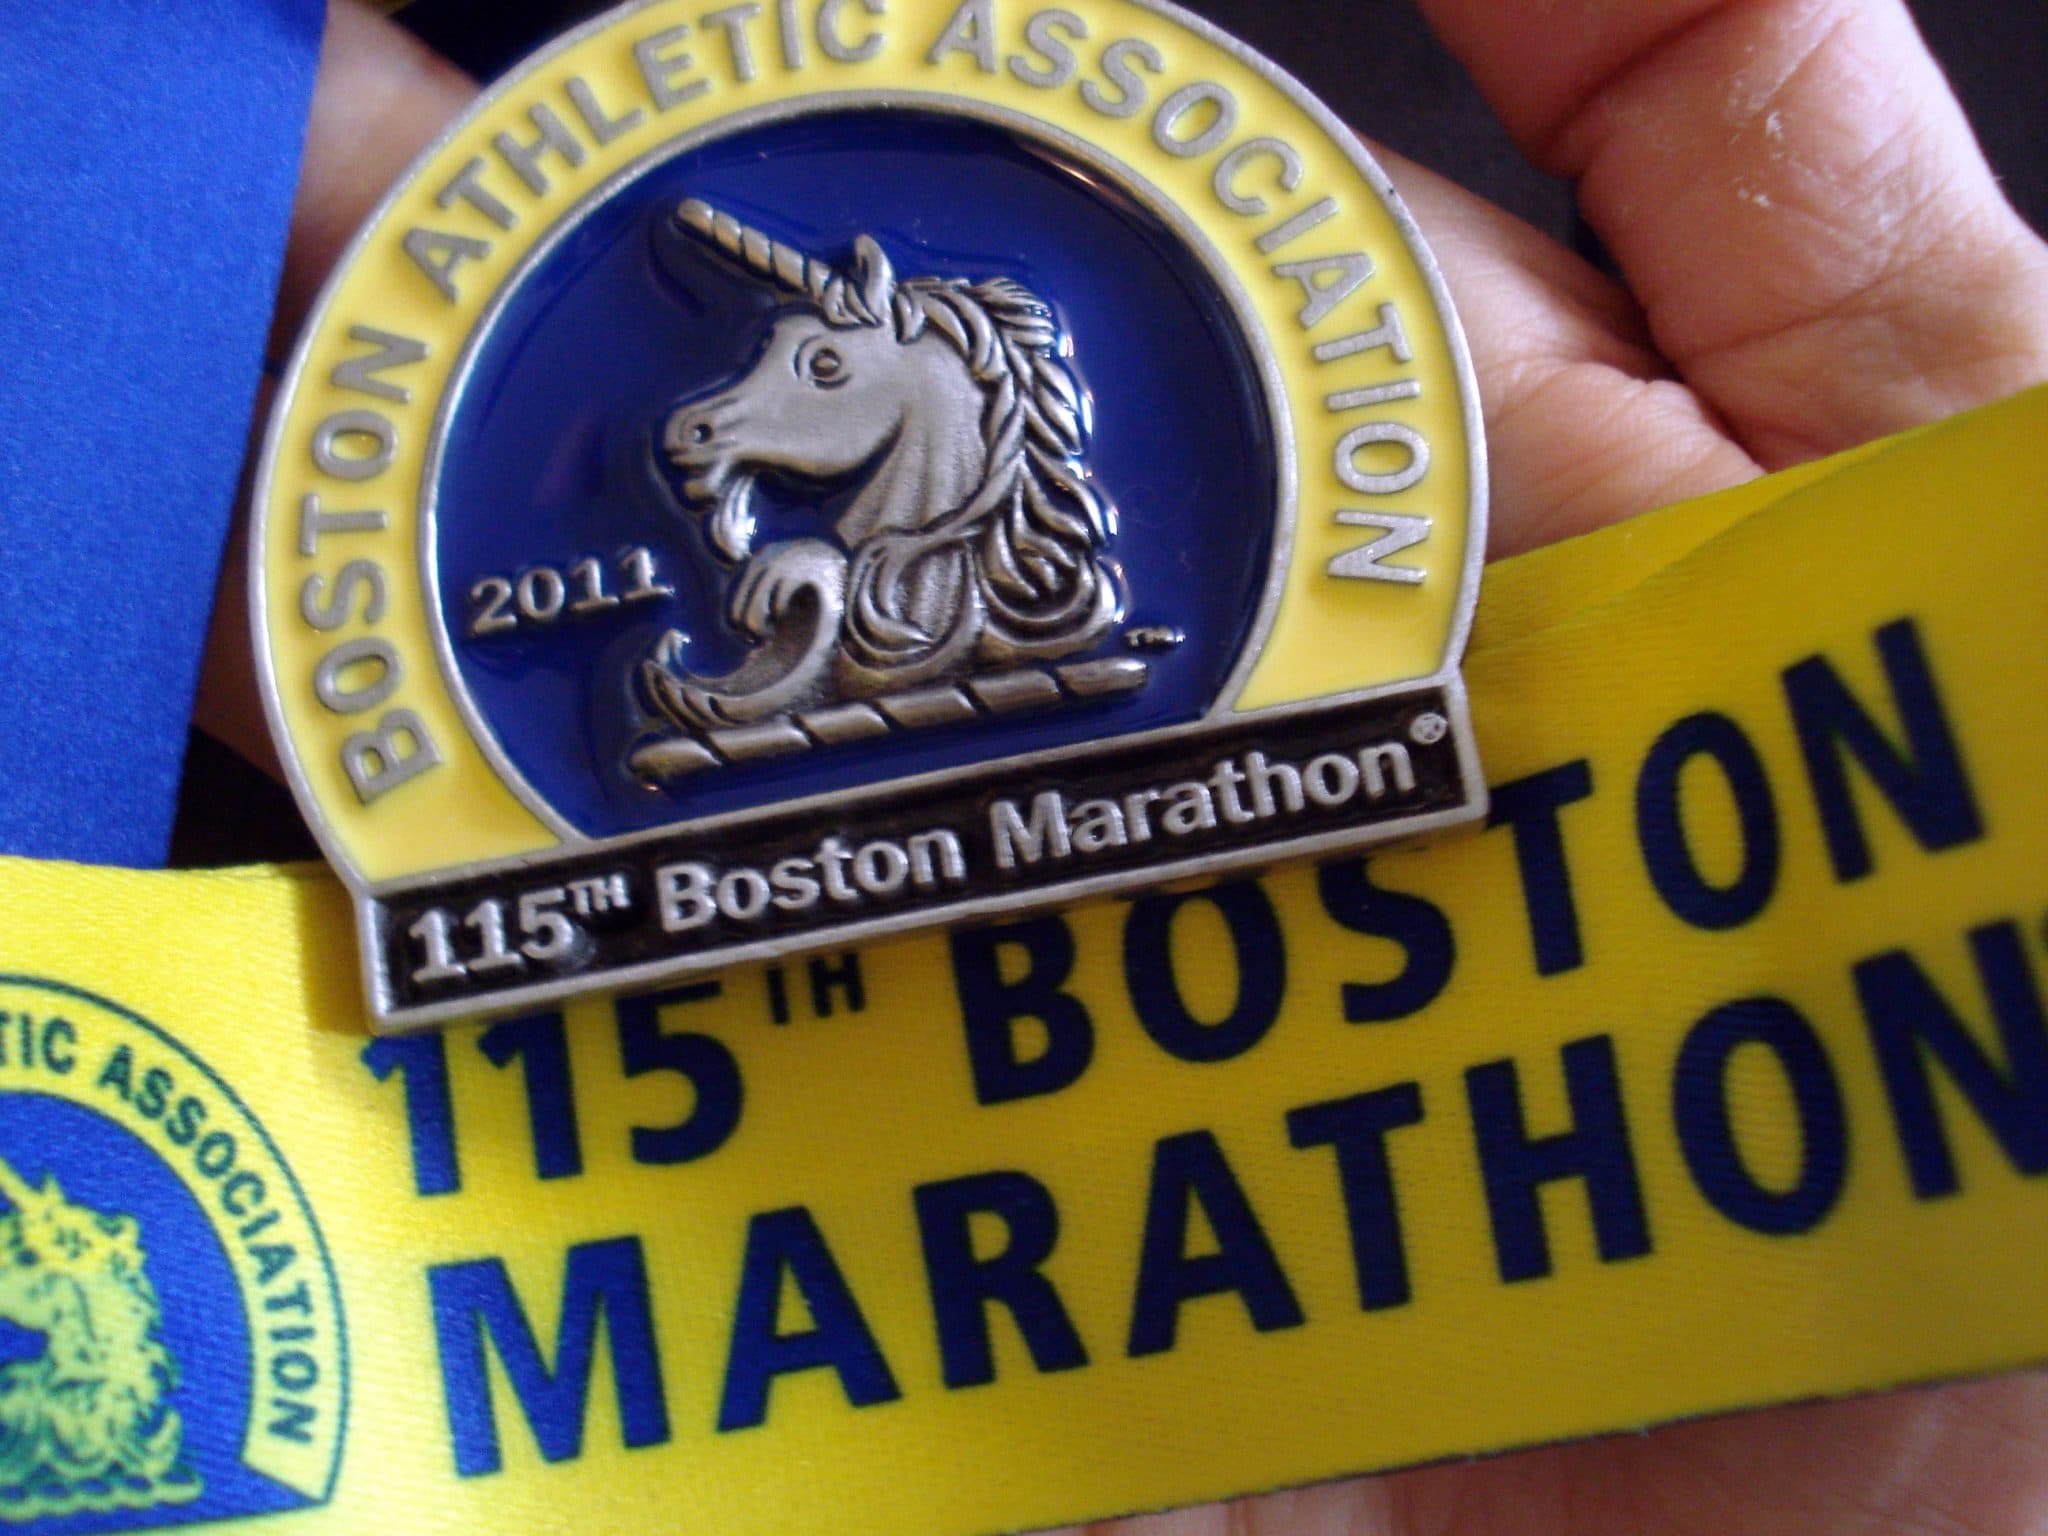 Boston Marathon Medal, 2011